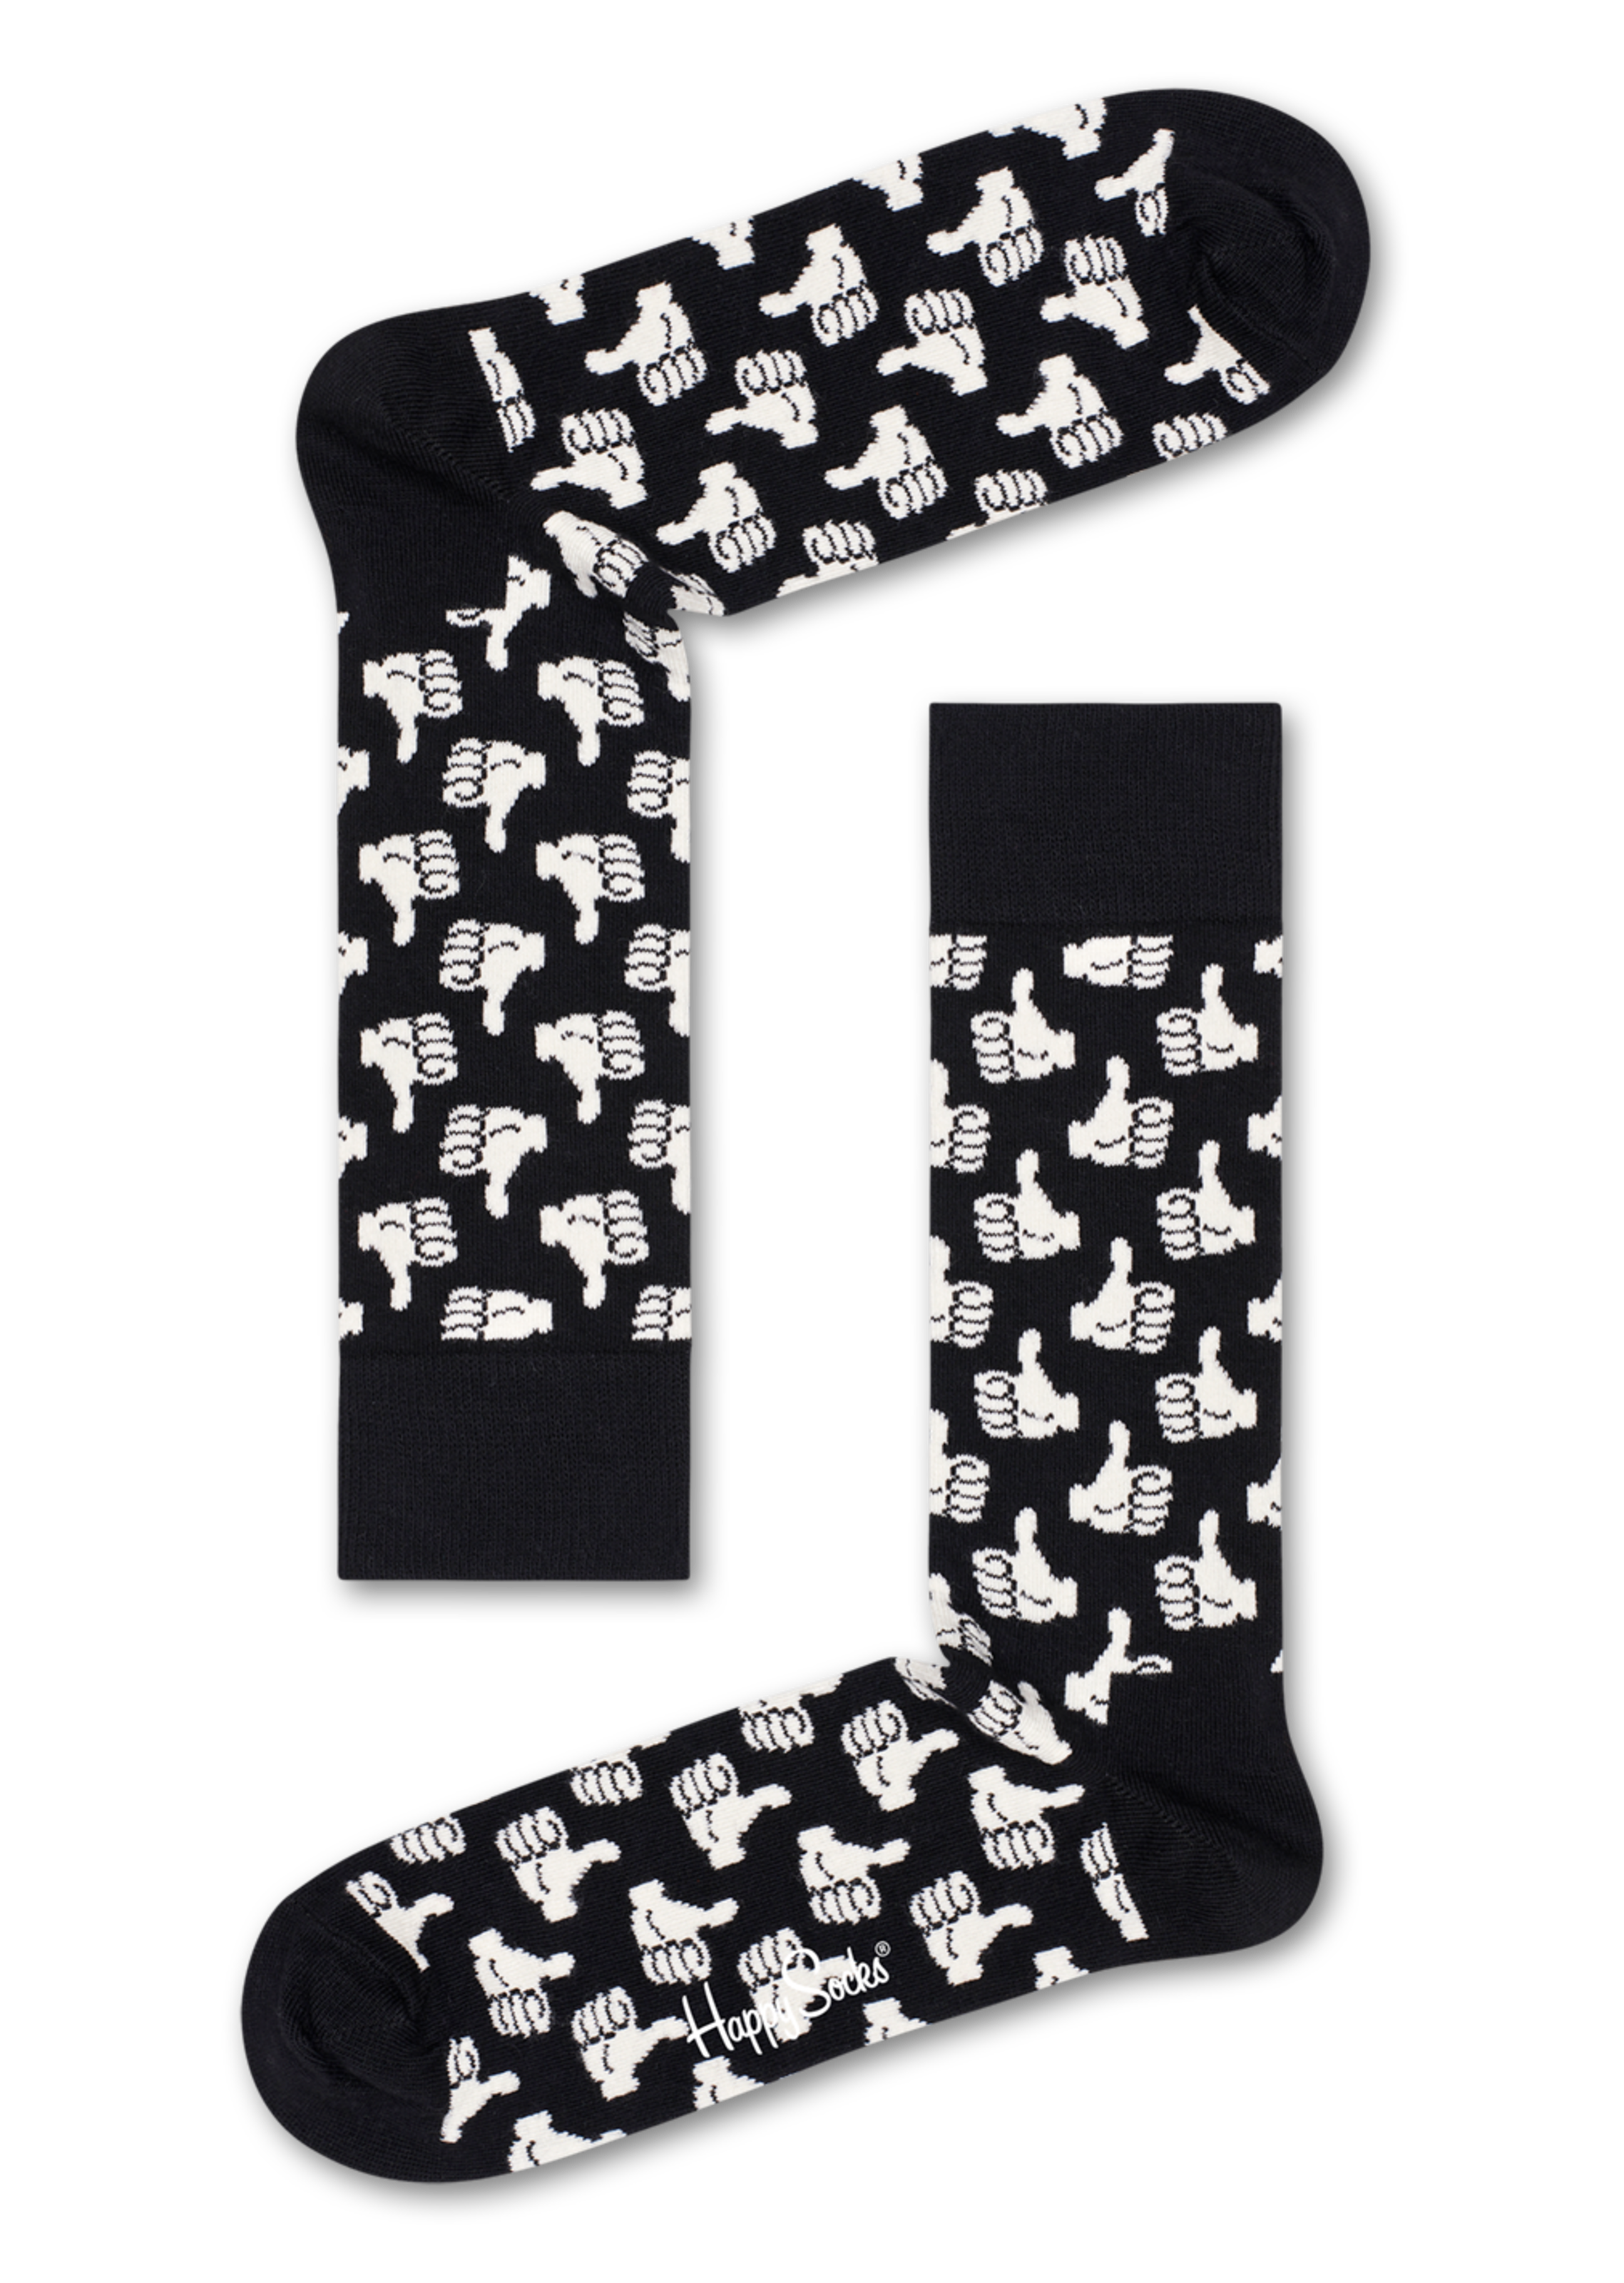 Black And White Socks Gift Socks Box | US Happy